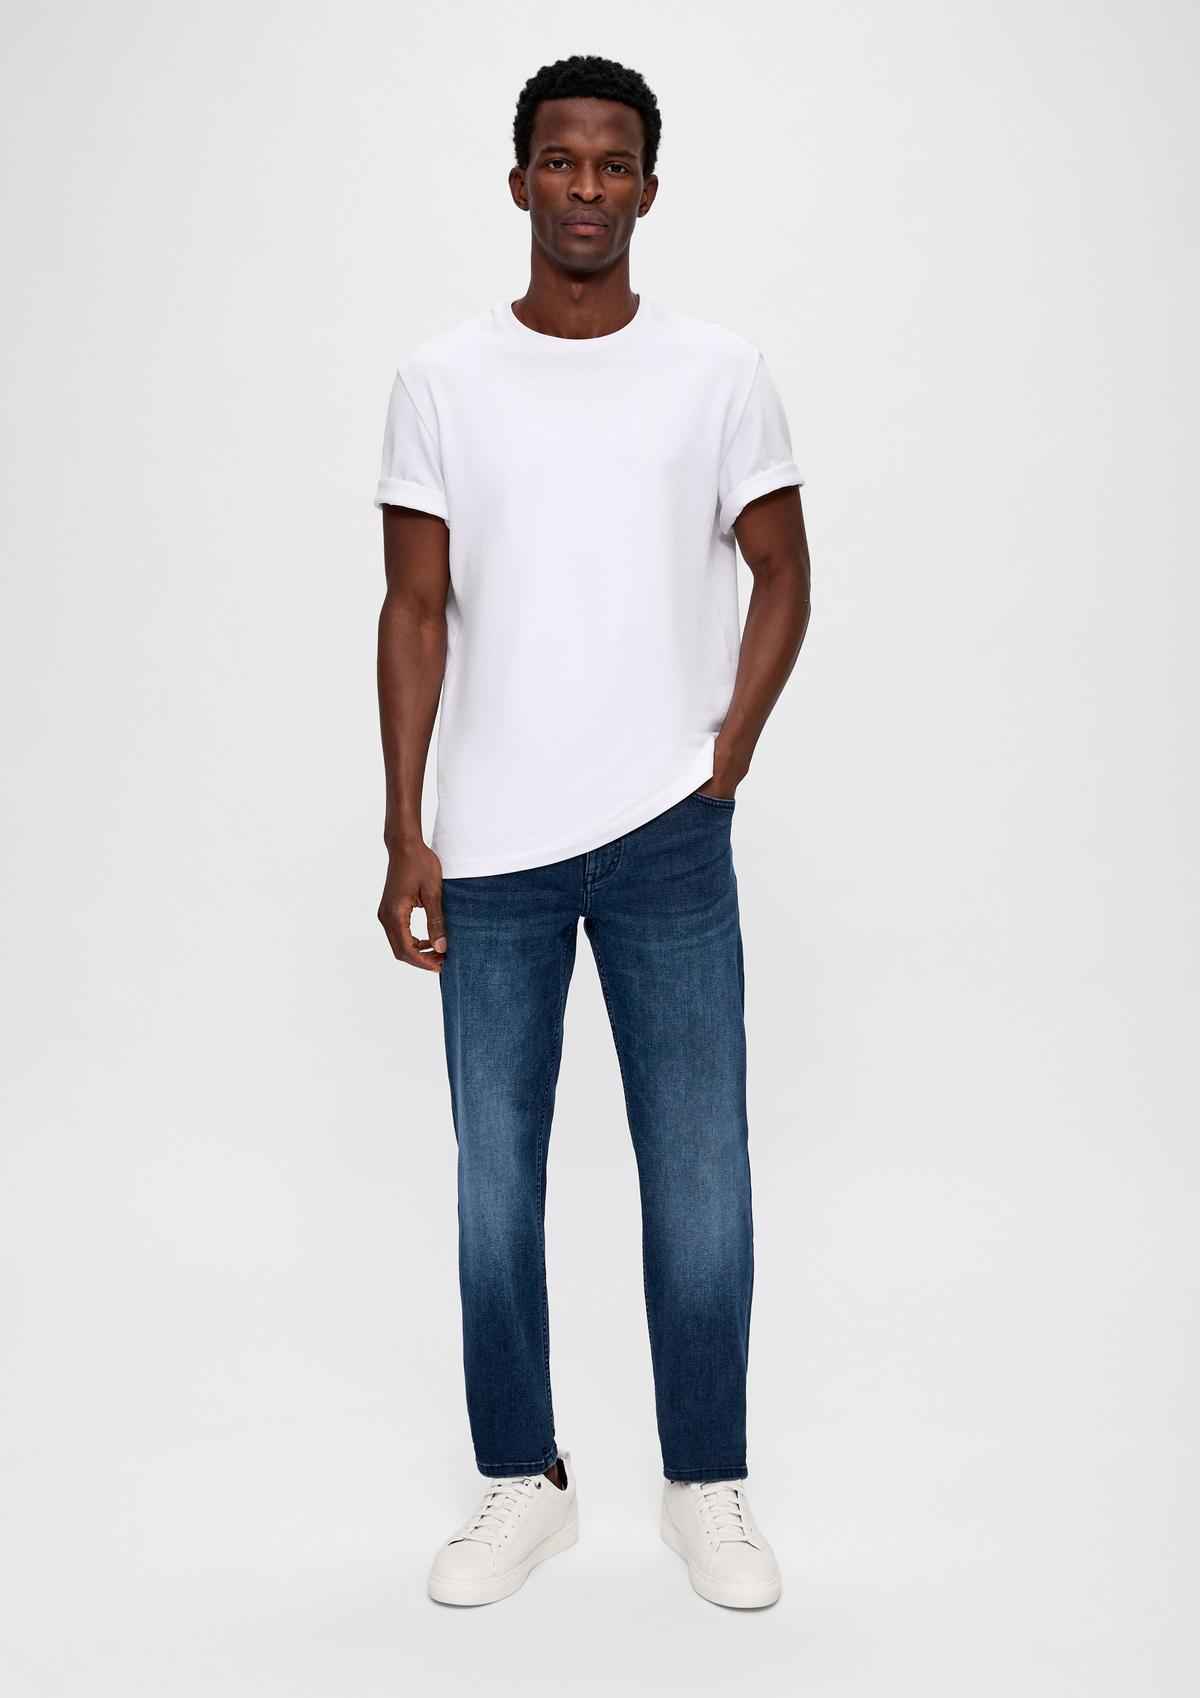 Jeans Nelio / slim fit / mid rise / slim leg / garment wash